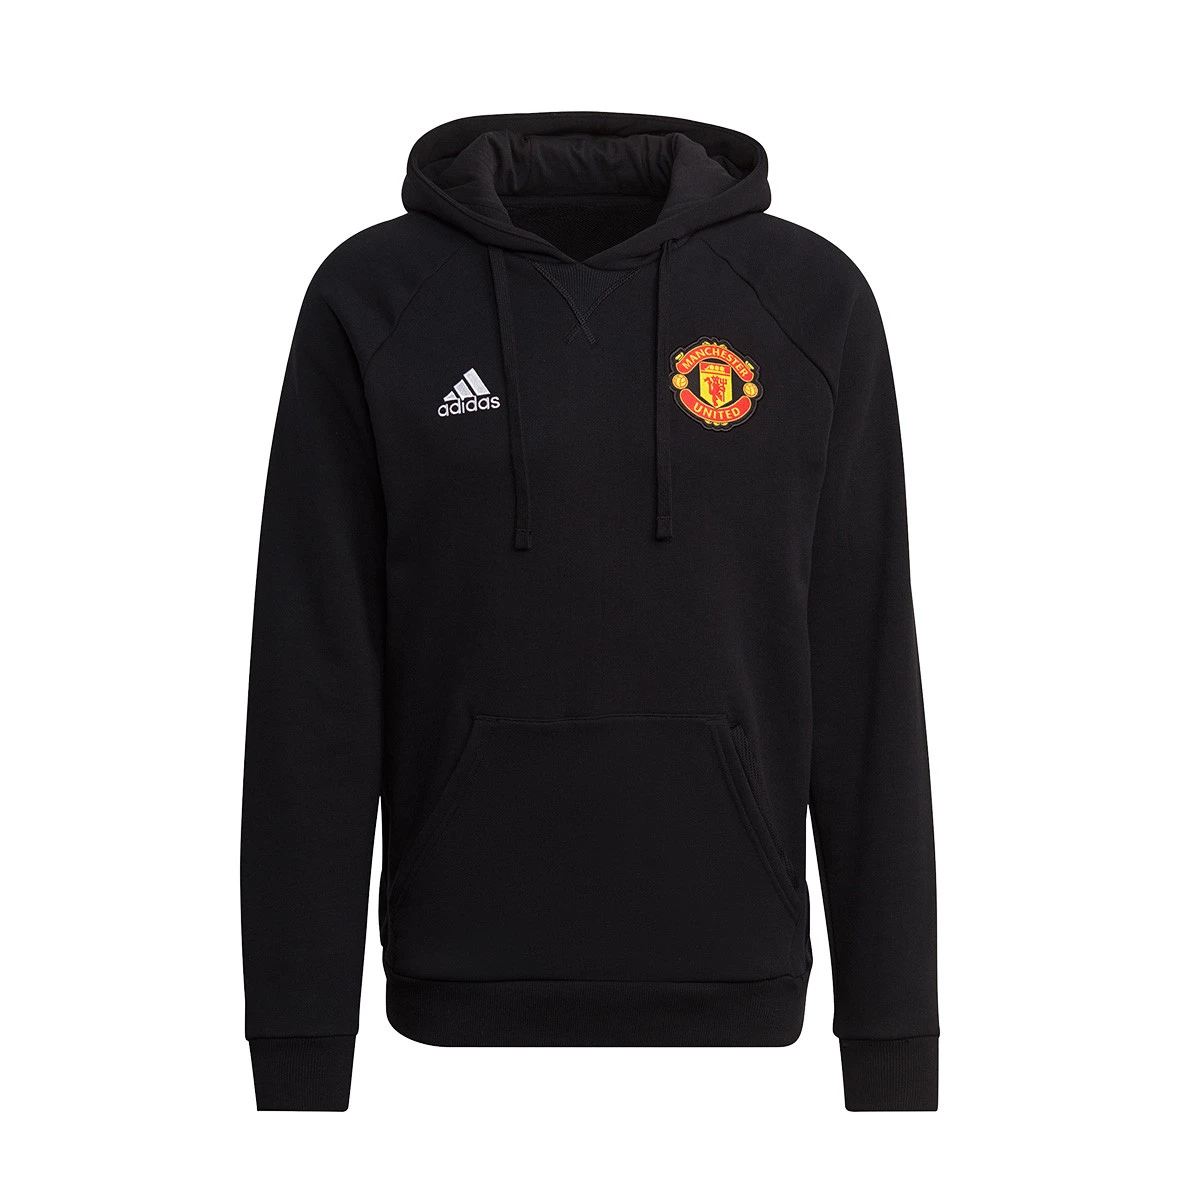 Adidas Manchester United mikina čierna pánska - SKLADOM